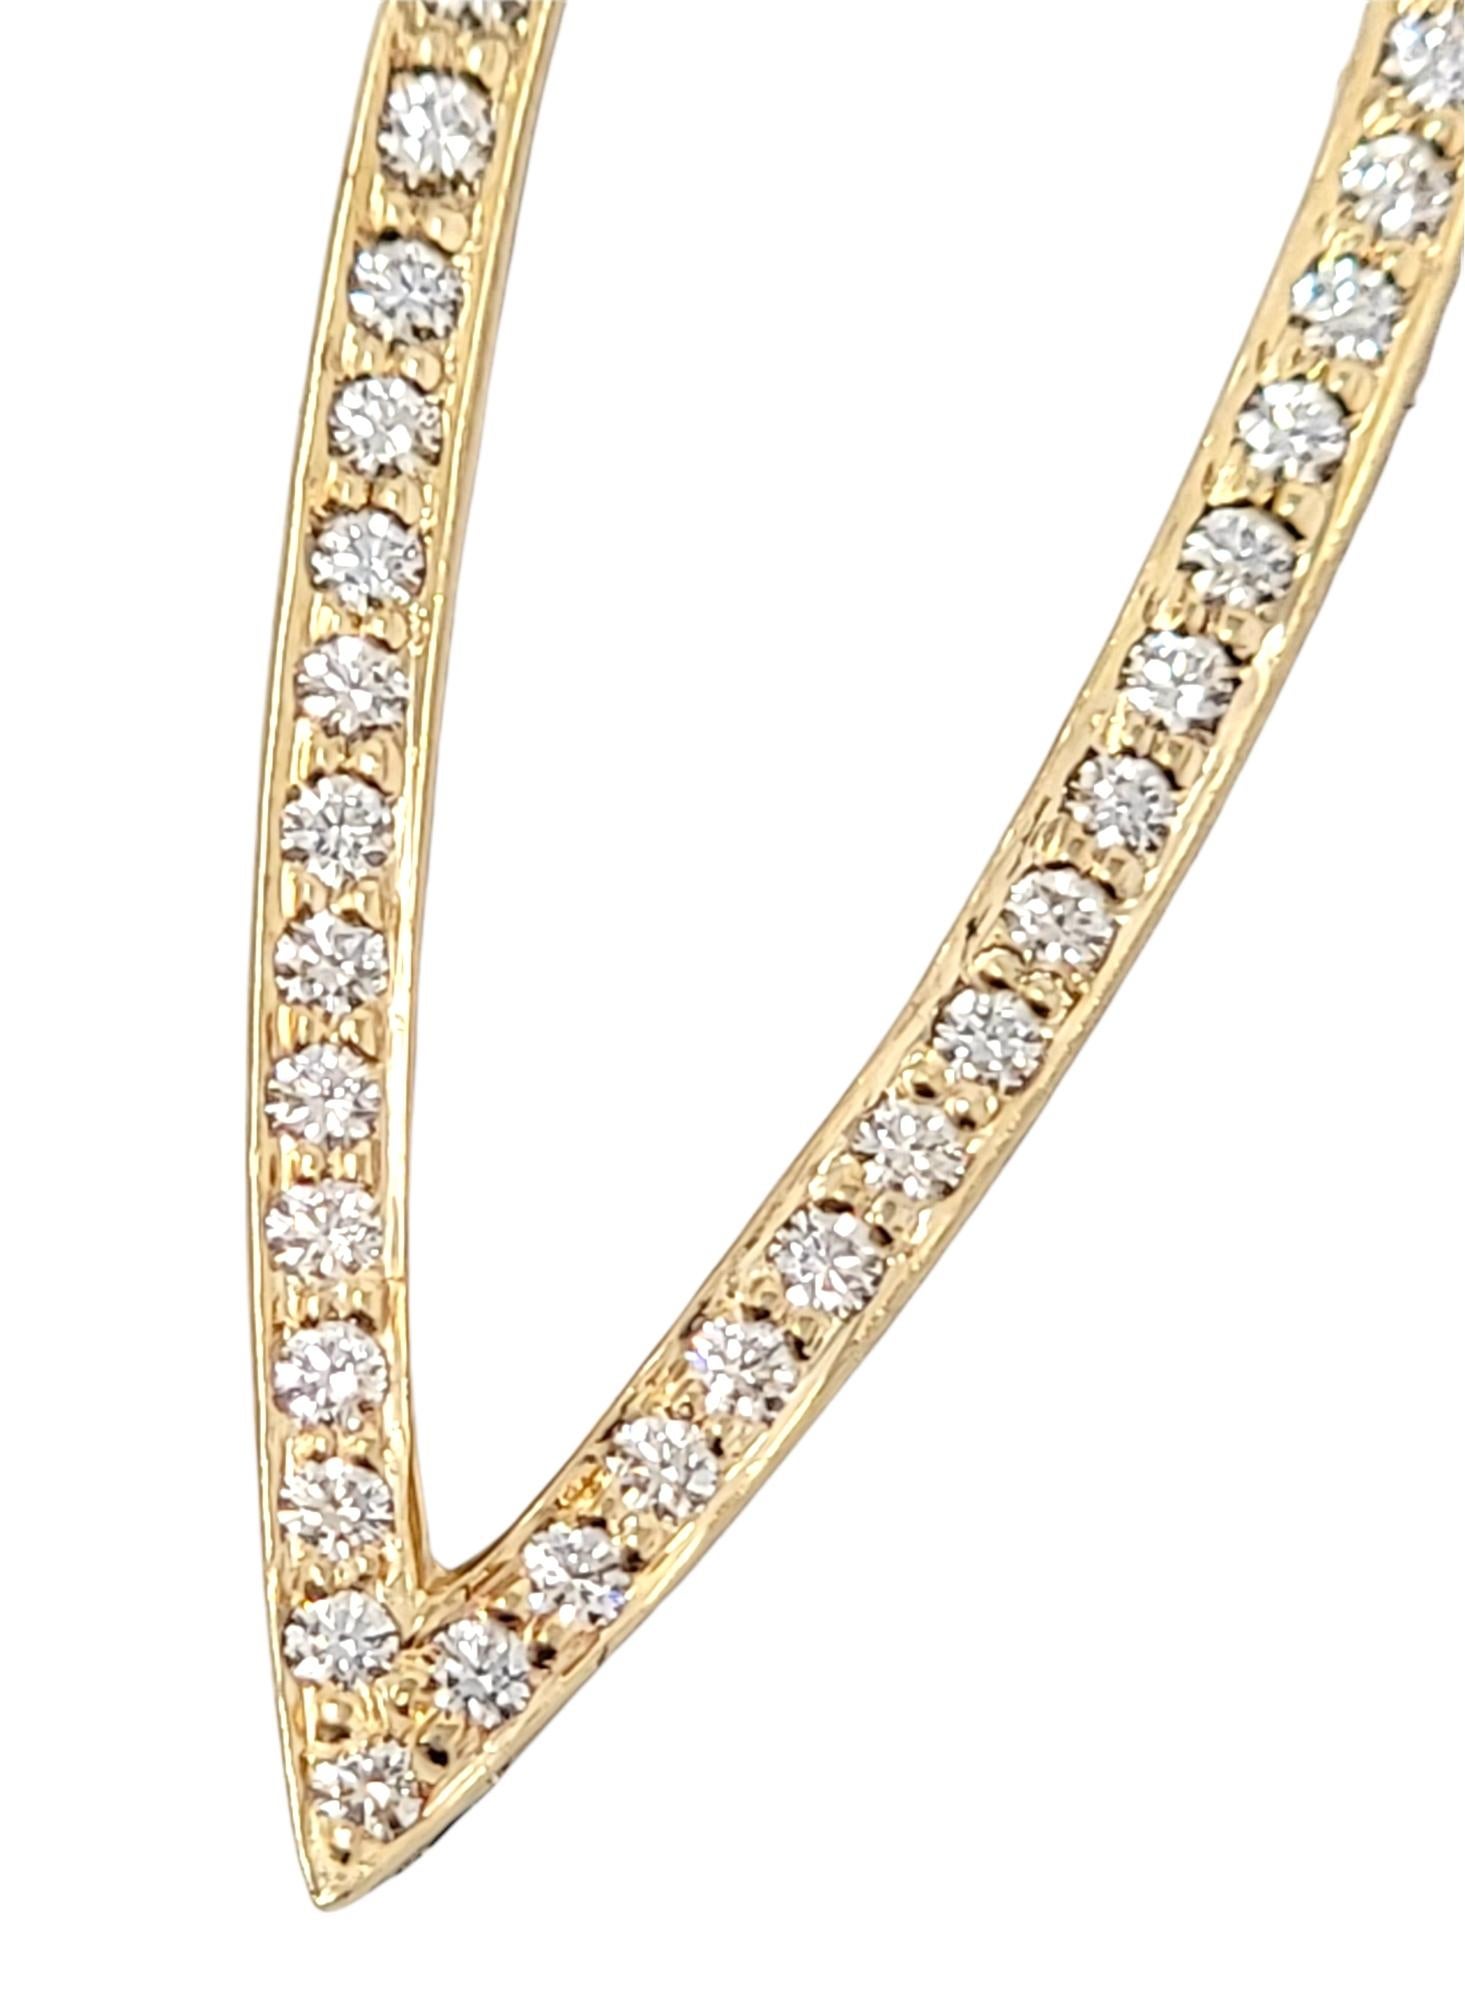 Contemporary 14 Karat Yellow Gold Navette Shaped Open Pave Diamond Drop Pierced Earrings For Sale